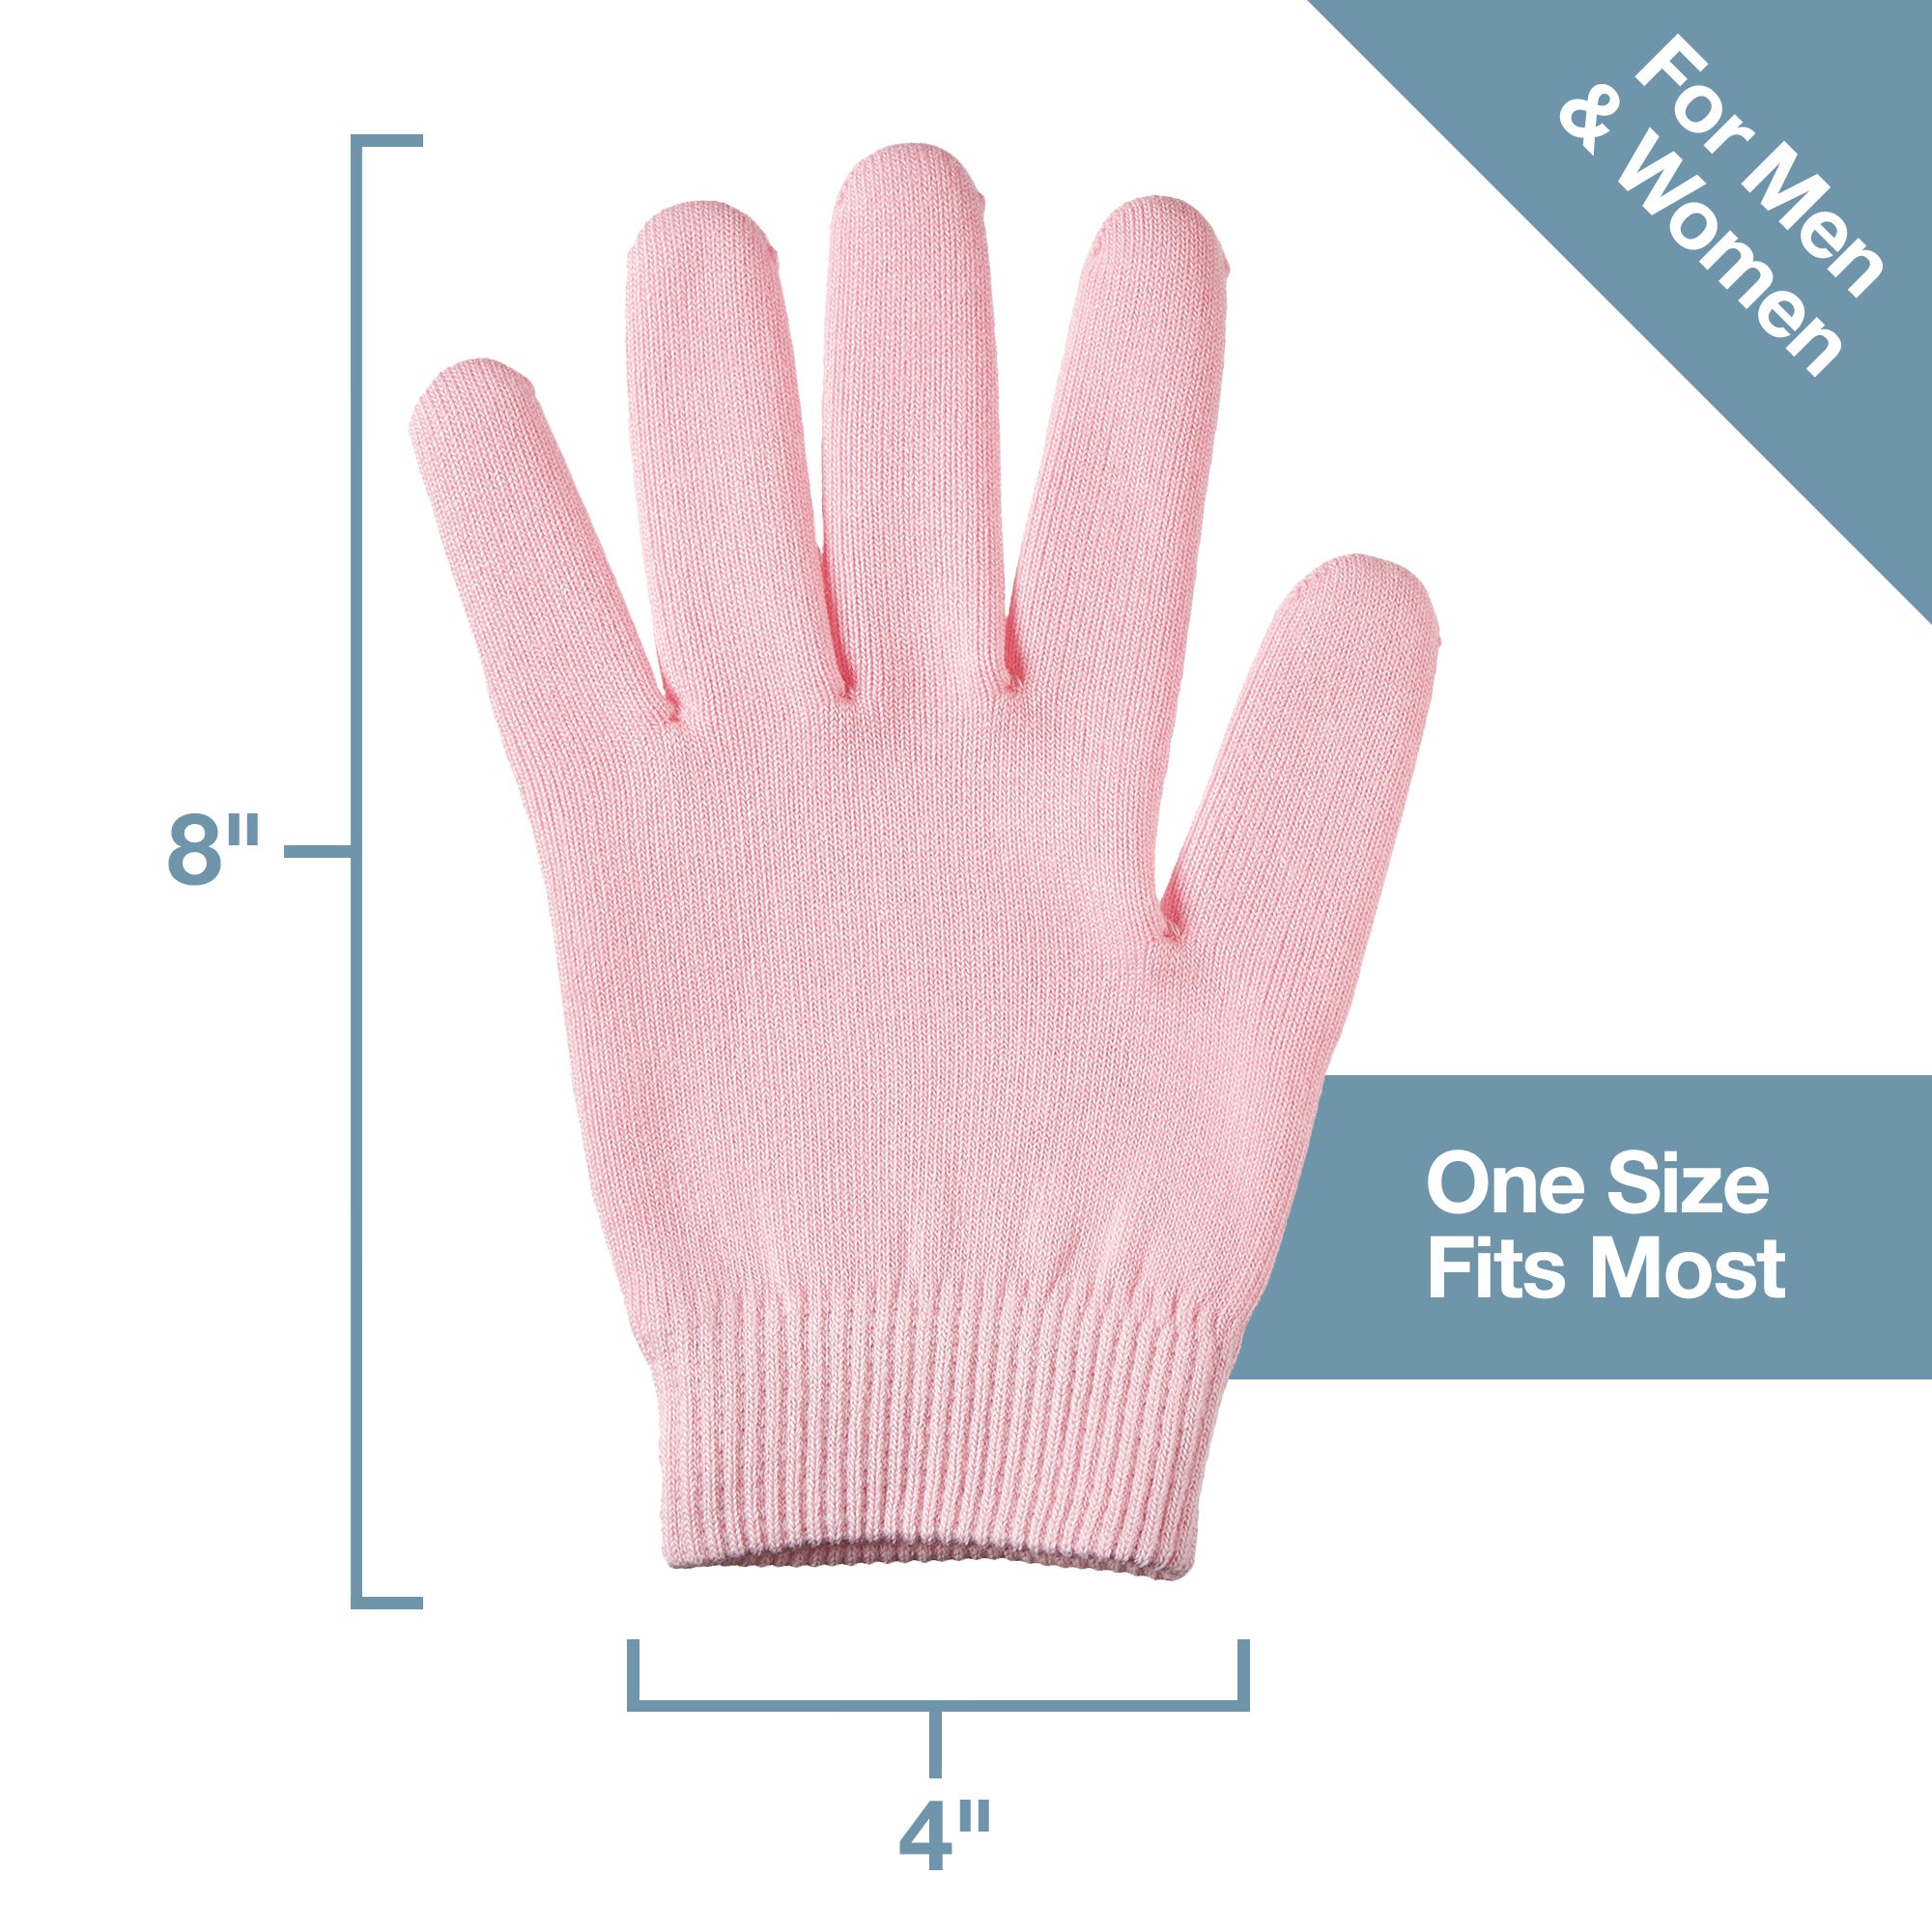 Moisturizing Hand Gloves